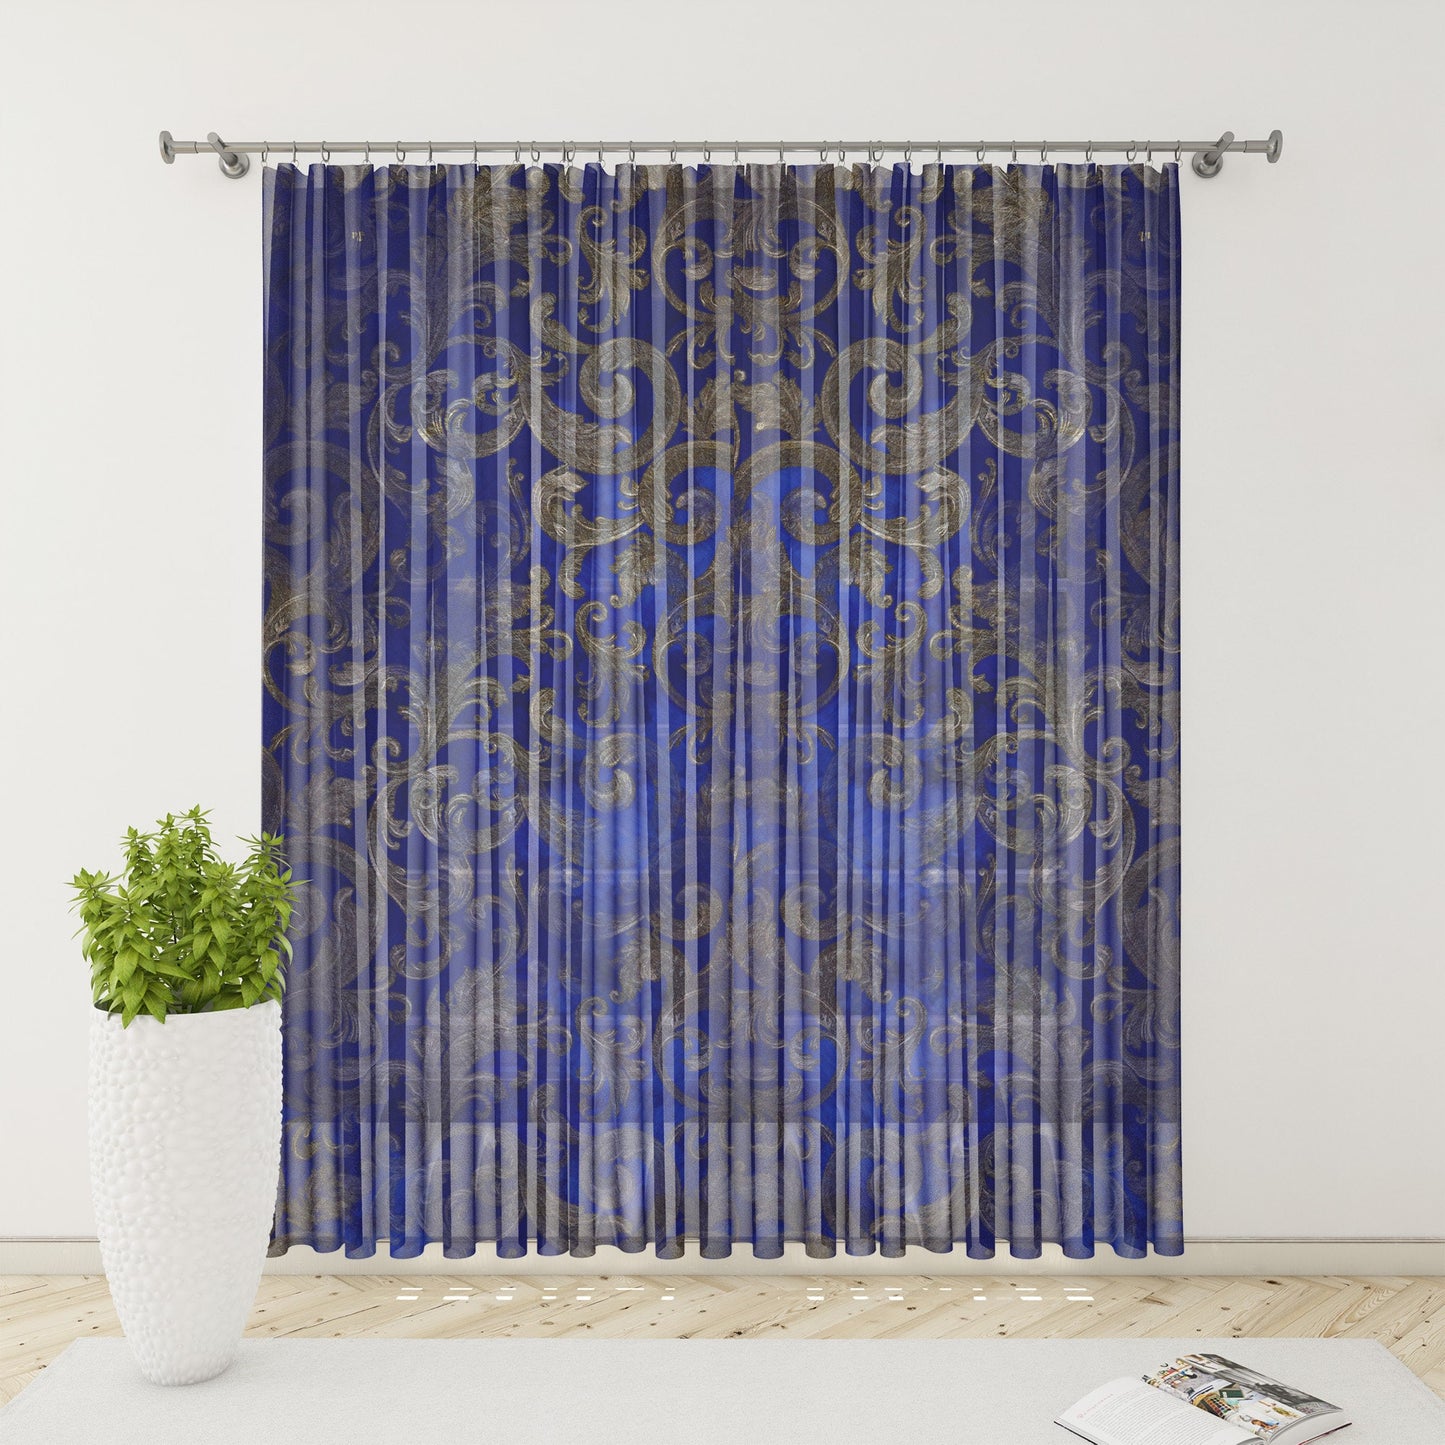 Curtains 2 PCS SET blue gold baroque or greek style romantic design • room curtains • blackout • home decor